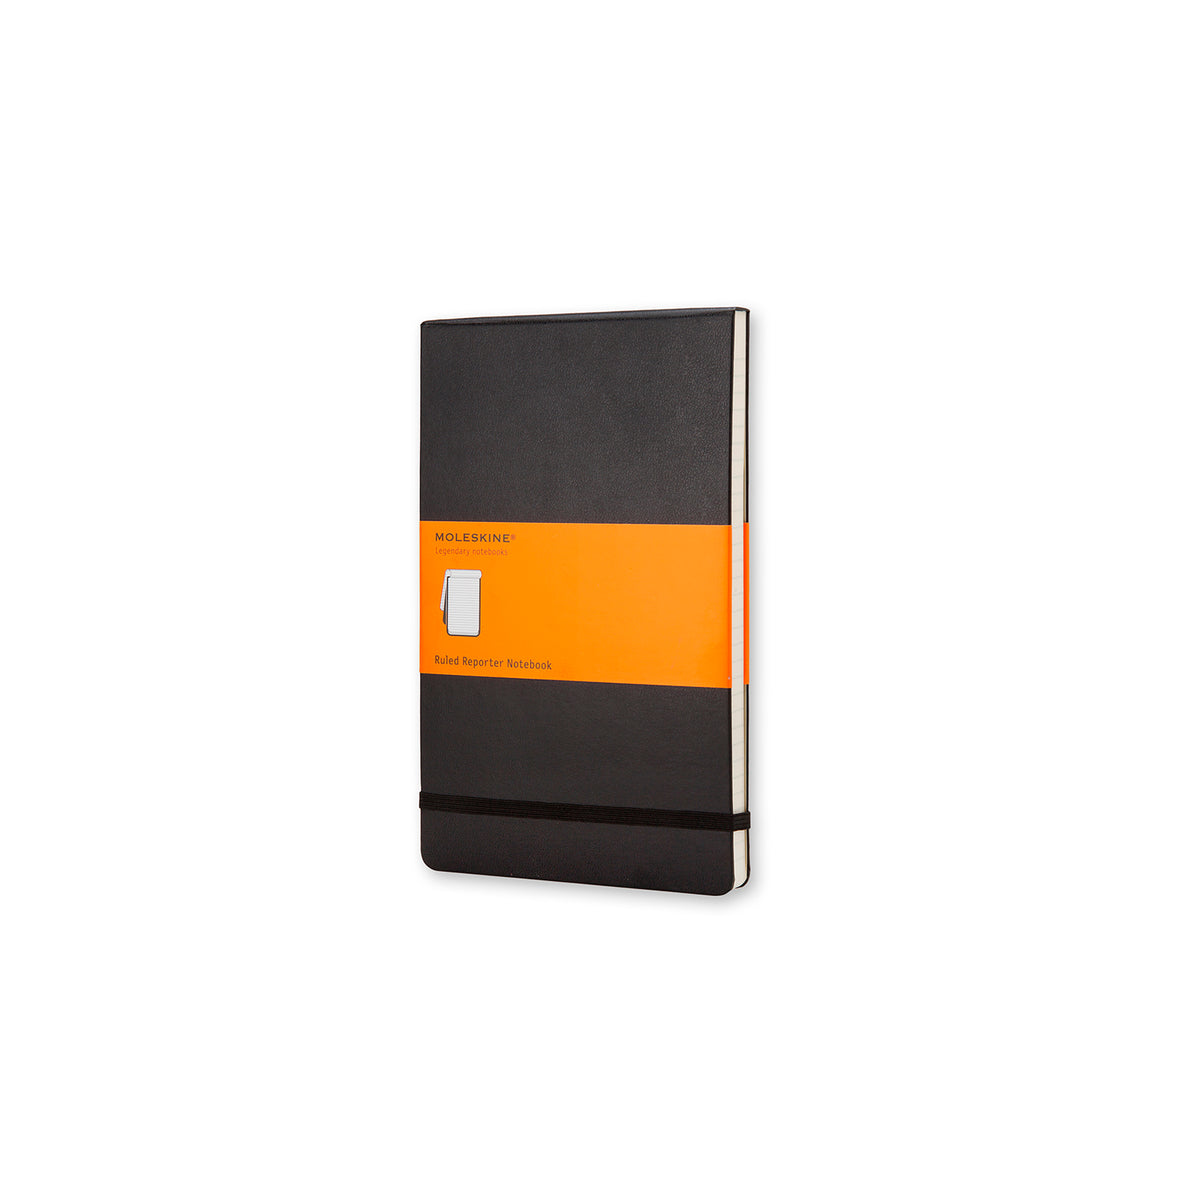 Moleskine - Classic Reporter Hard Cover Notepad - Ruled - Pocket - Black